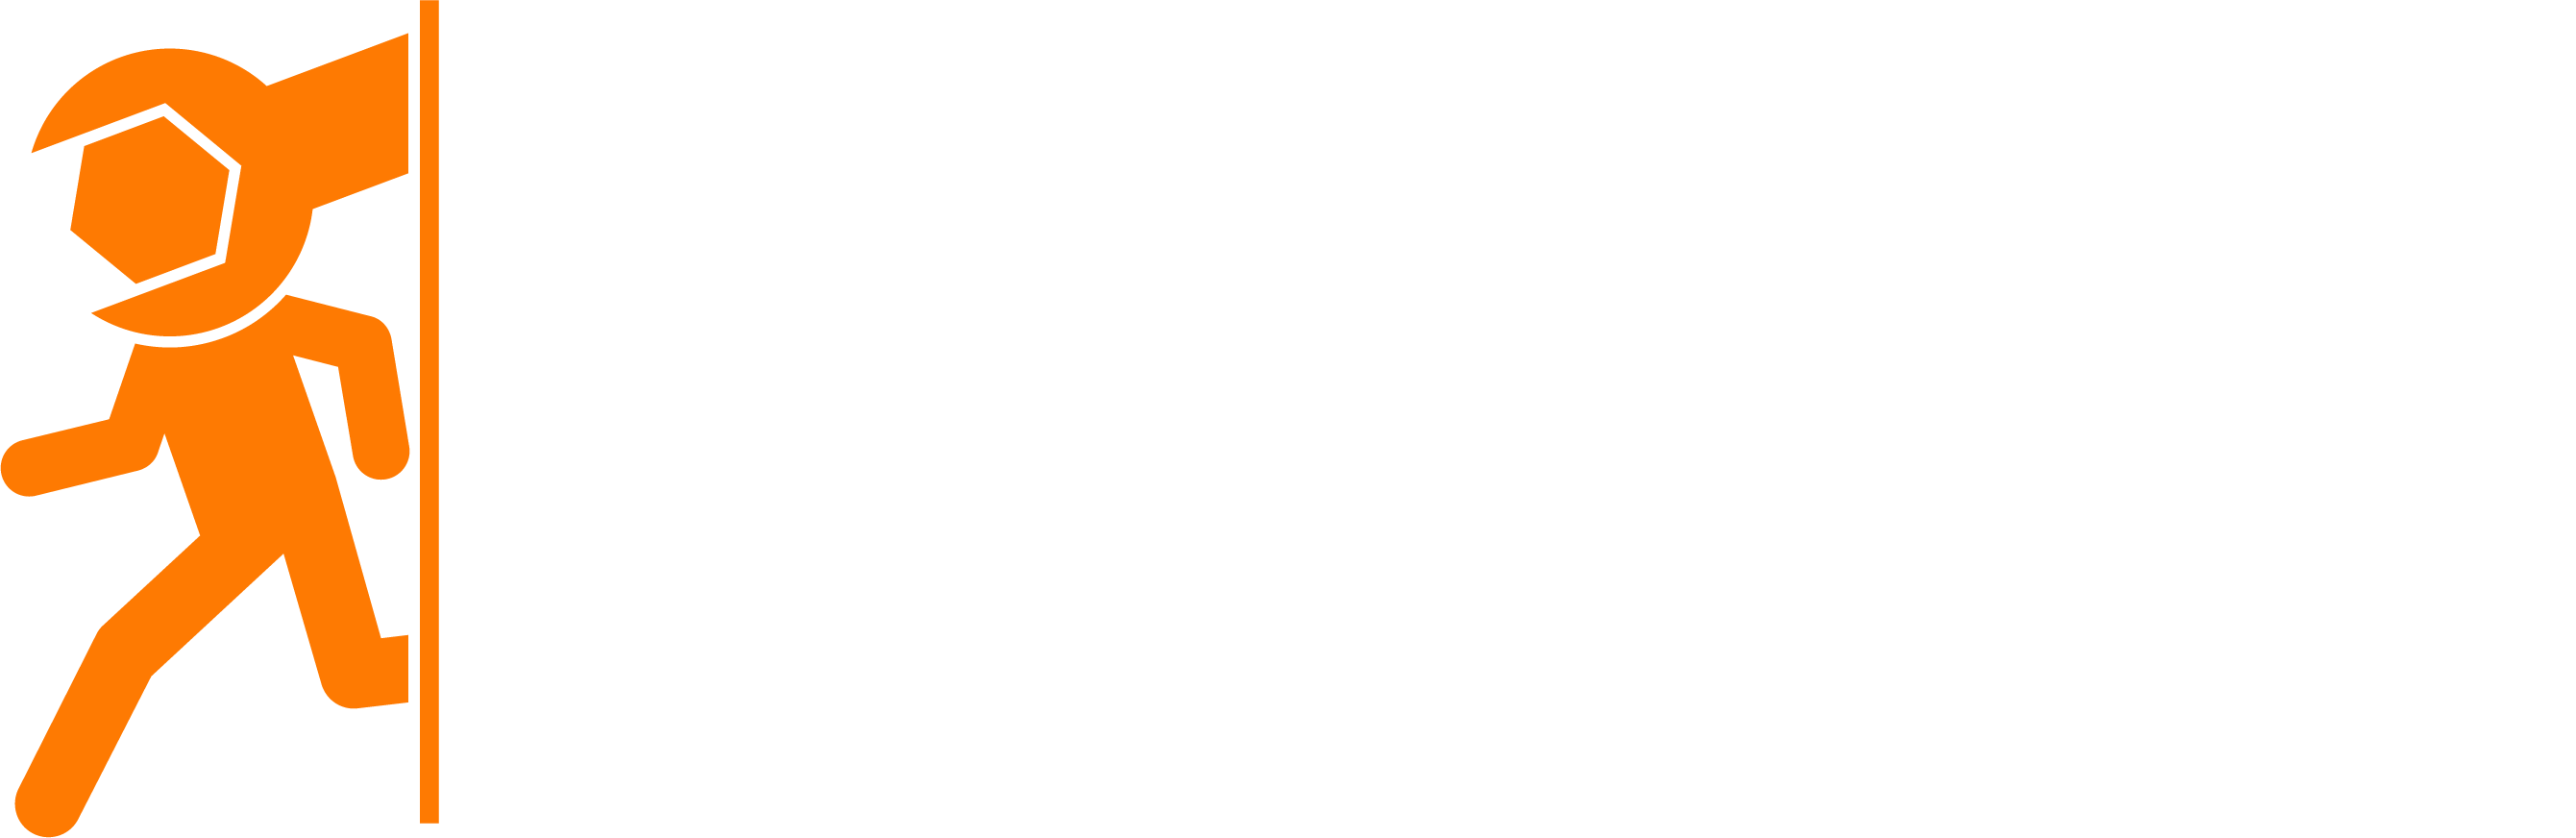 Portal 2 Logo PNG HD Quality